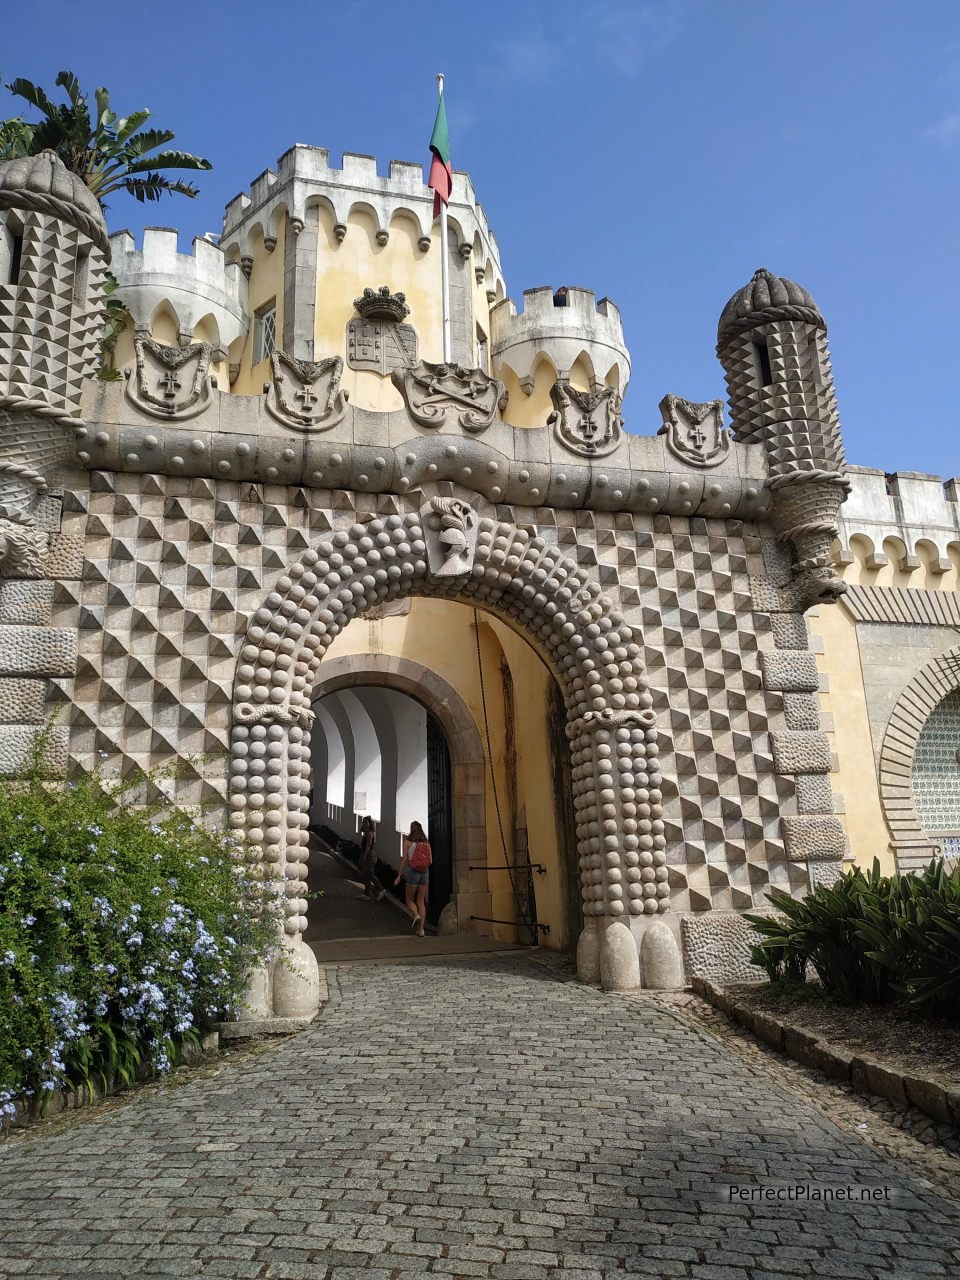 National Palace of Pena